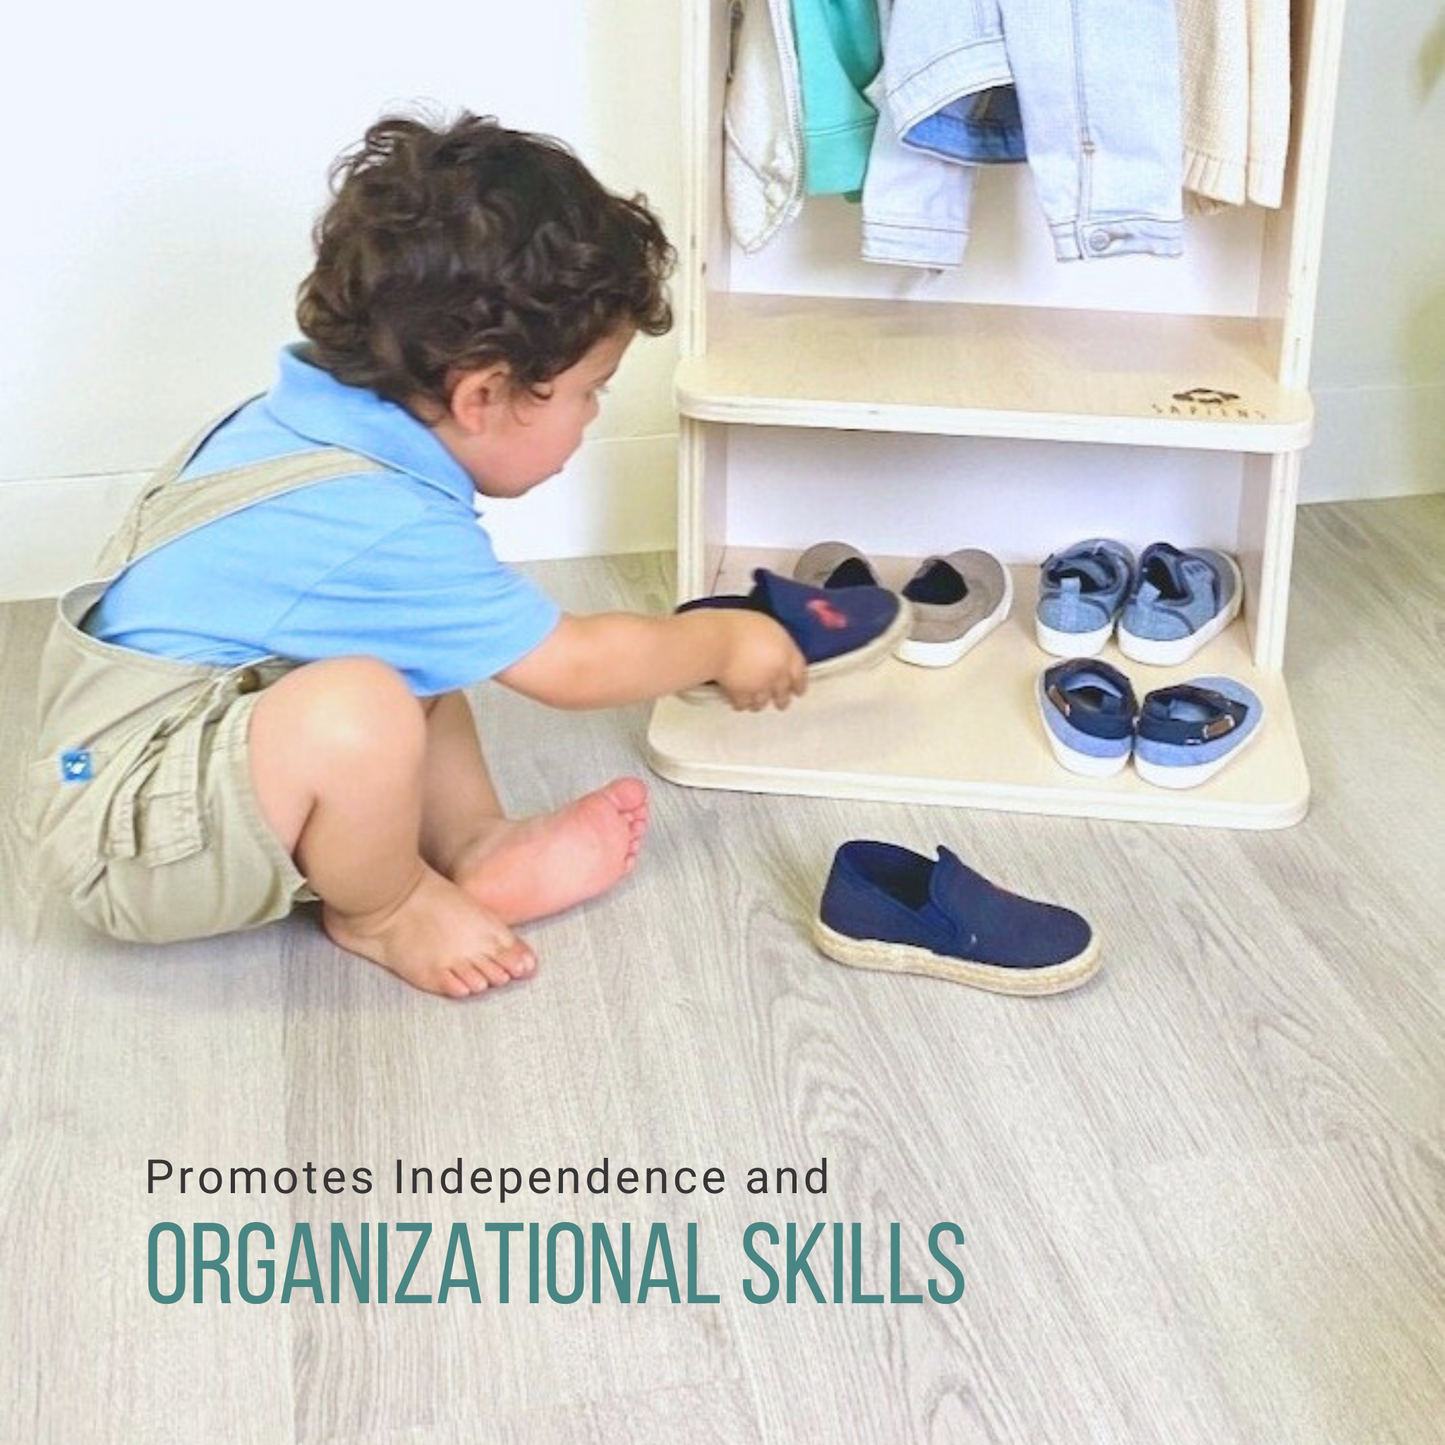 Montessori Furniture Essentials Bundle